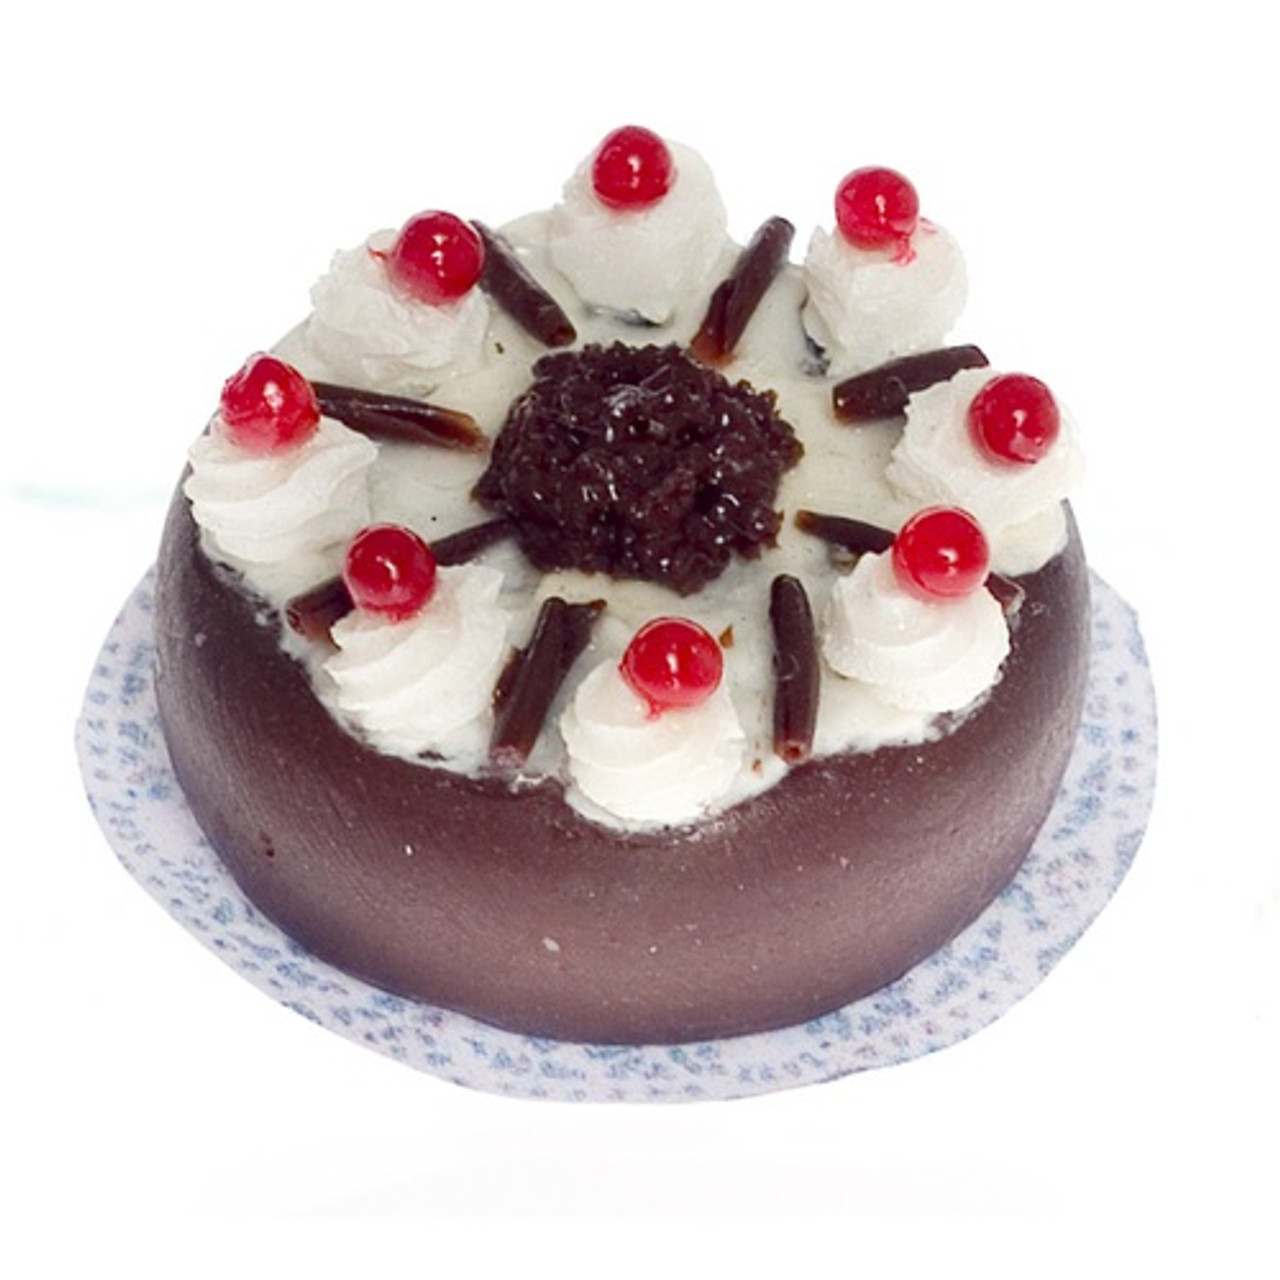 Chocolate Cherry Cream Layer Cake (A3718)